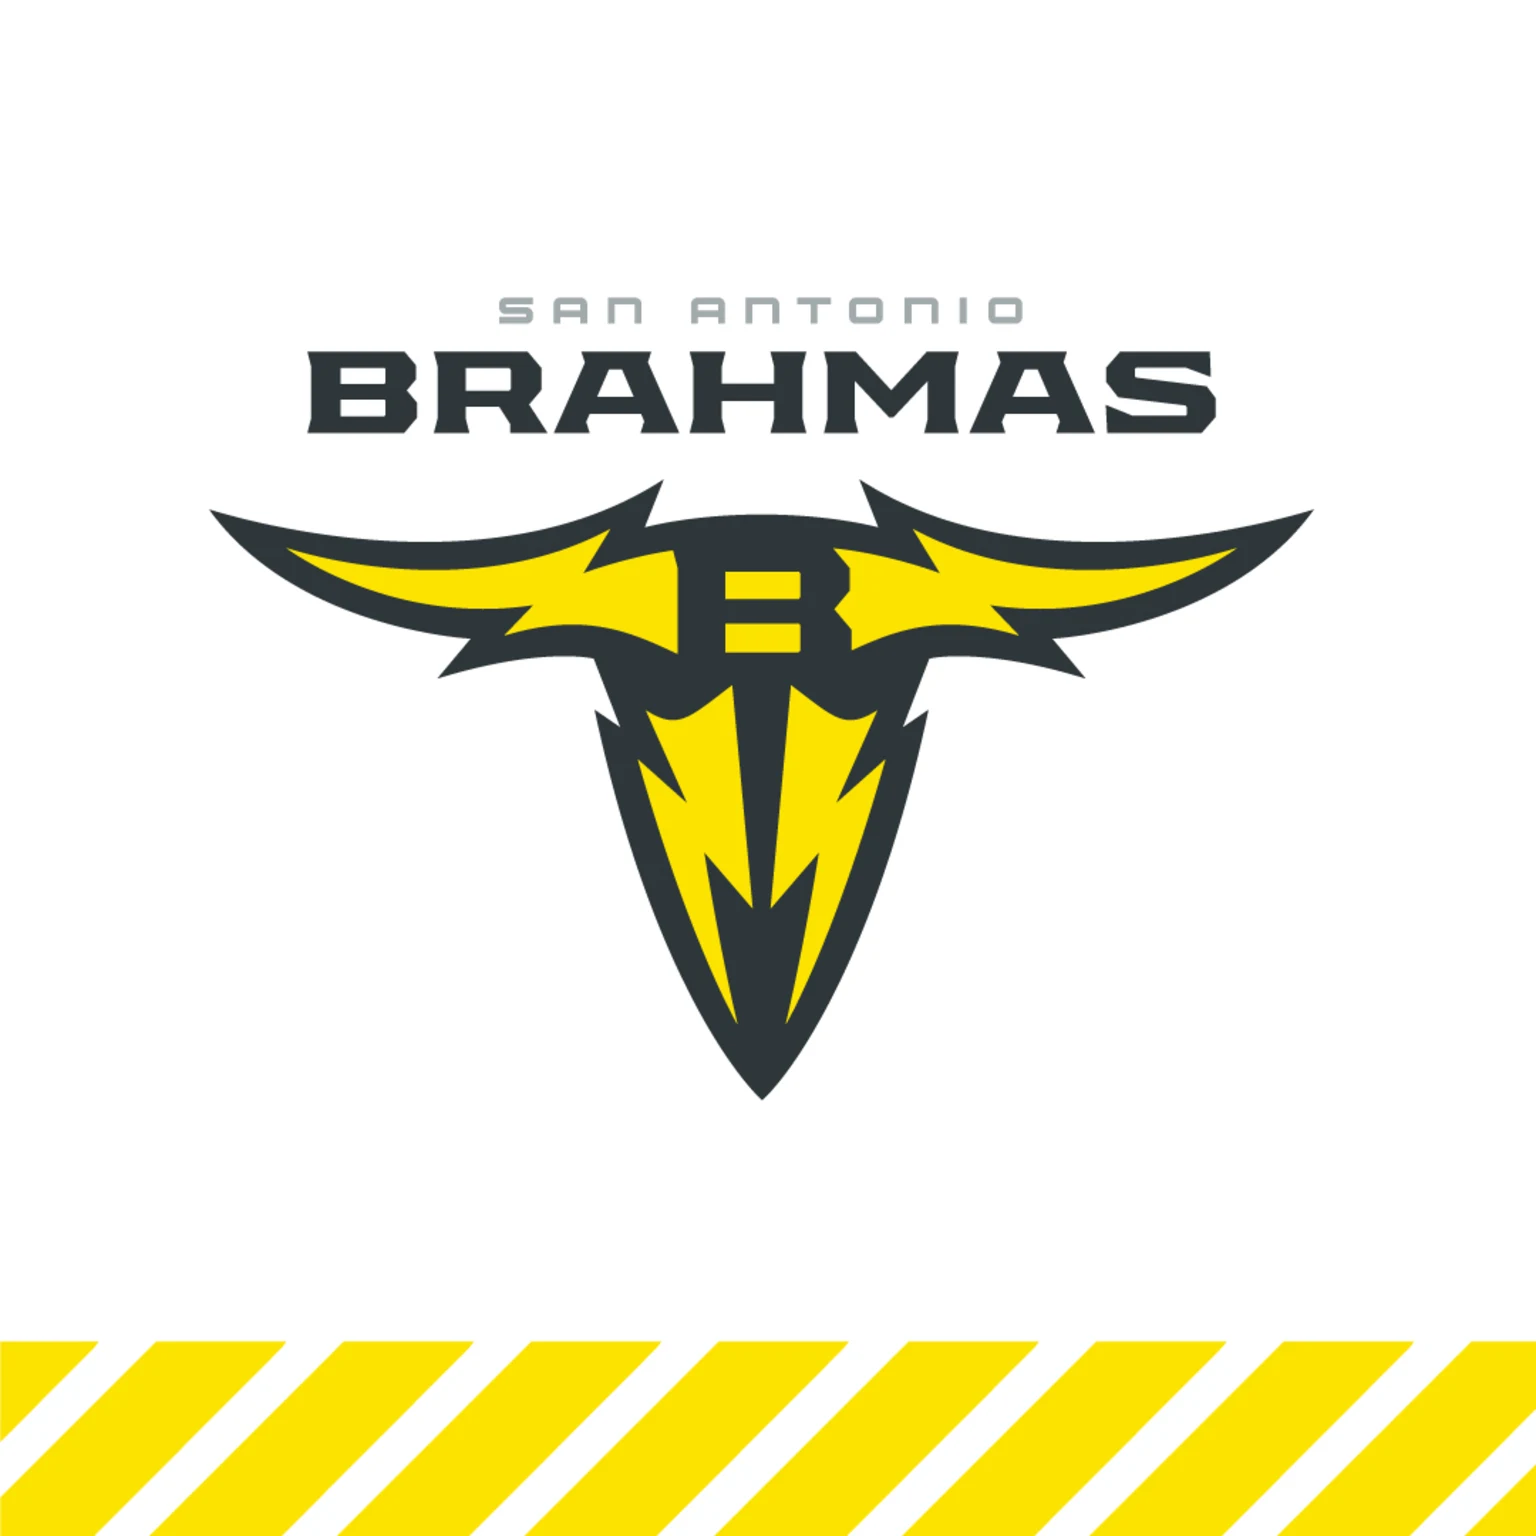 A logo for the San Antonio Brahmas of the XFL